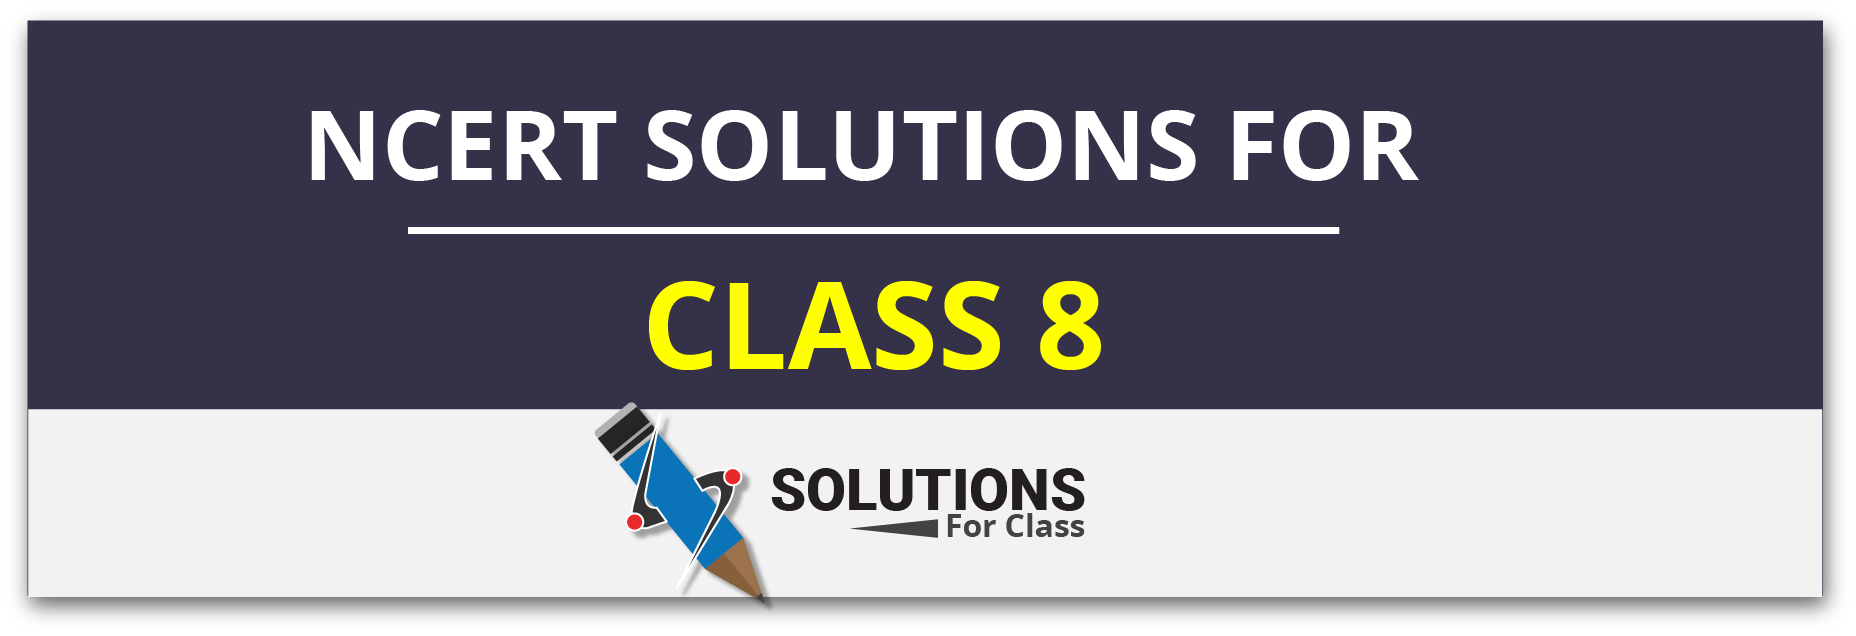 NCERT Solution For Class 8